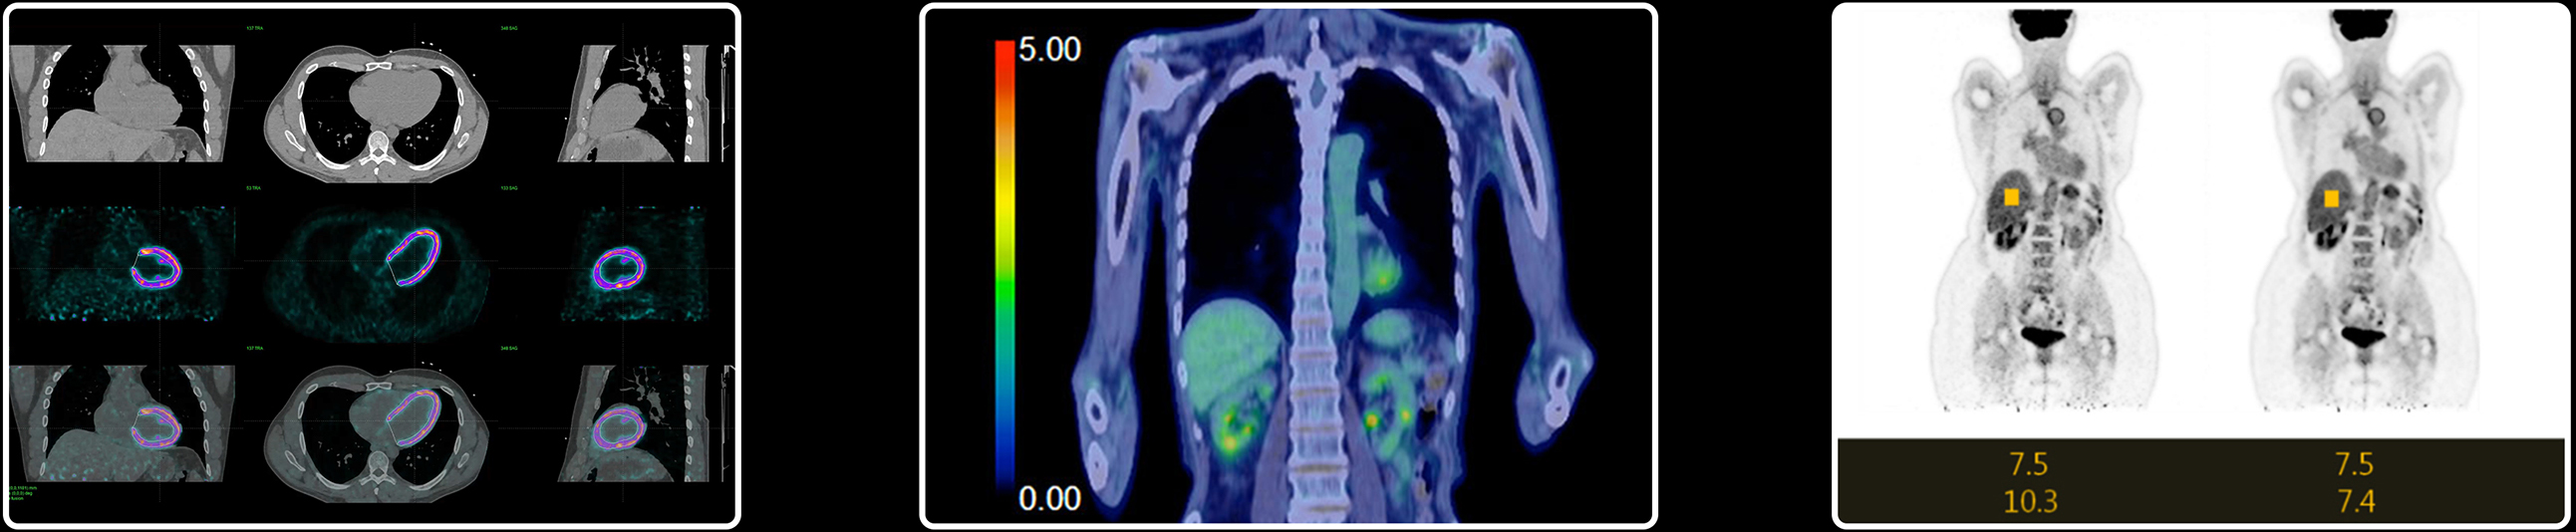 Celesteion PET-CT Scanner Clinical Image